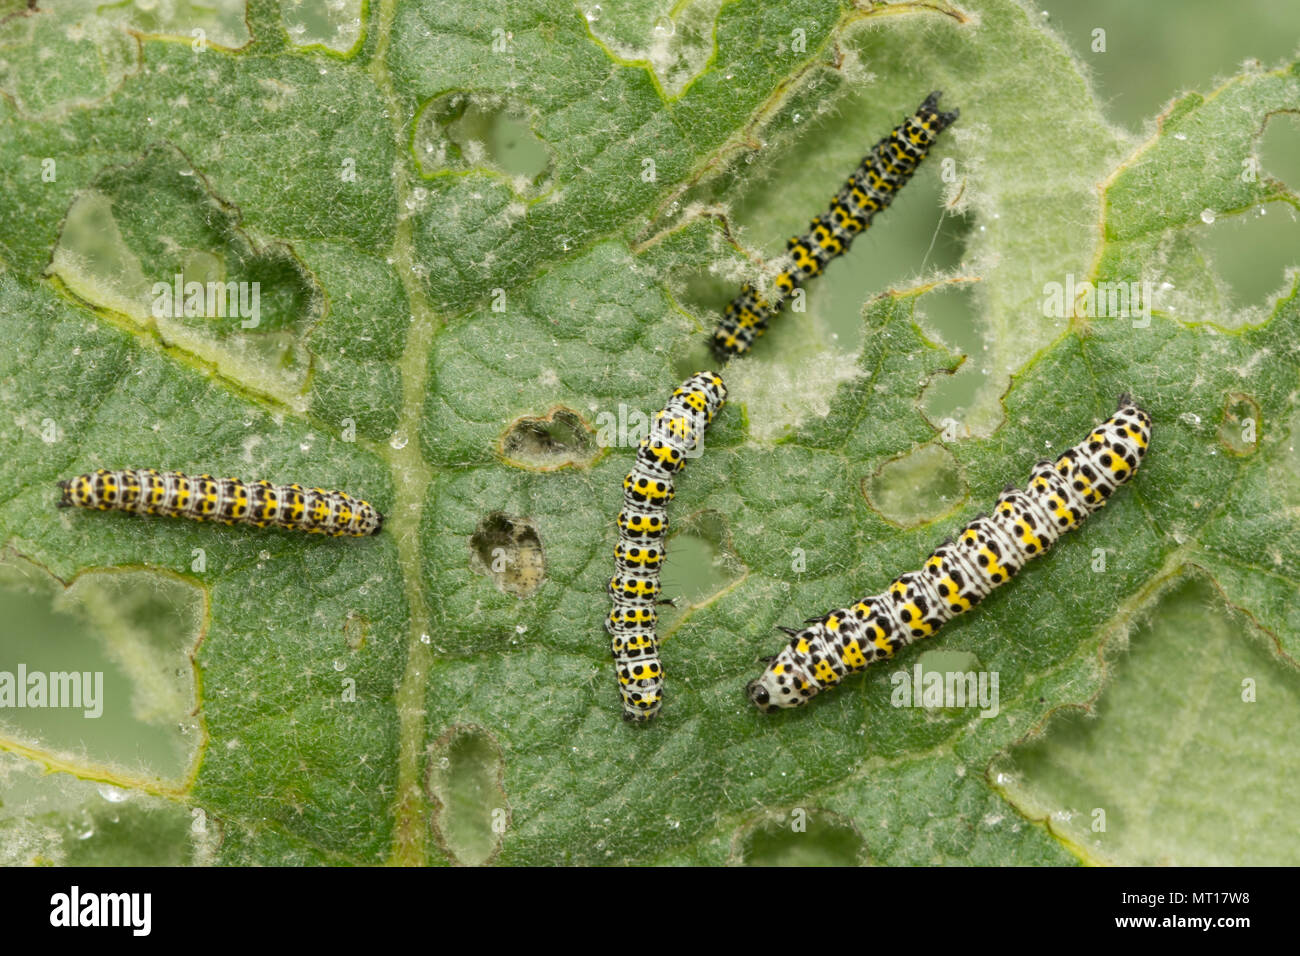 Mullein moth larvae or caterpillars (Cucullia verbasci) feeding on mullein  leaves at Denbies Hillside, Surrey, UK Stock Photo